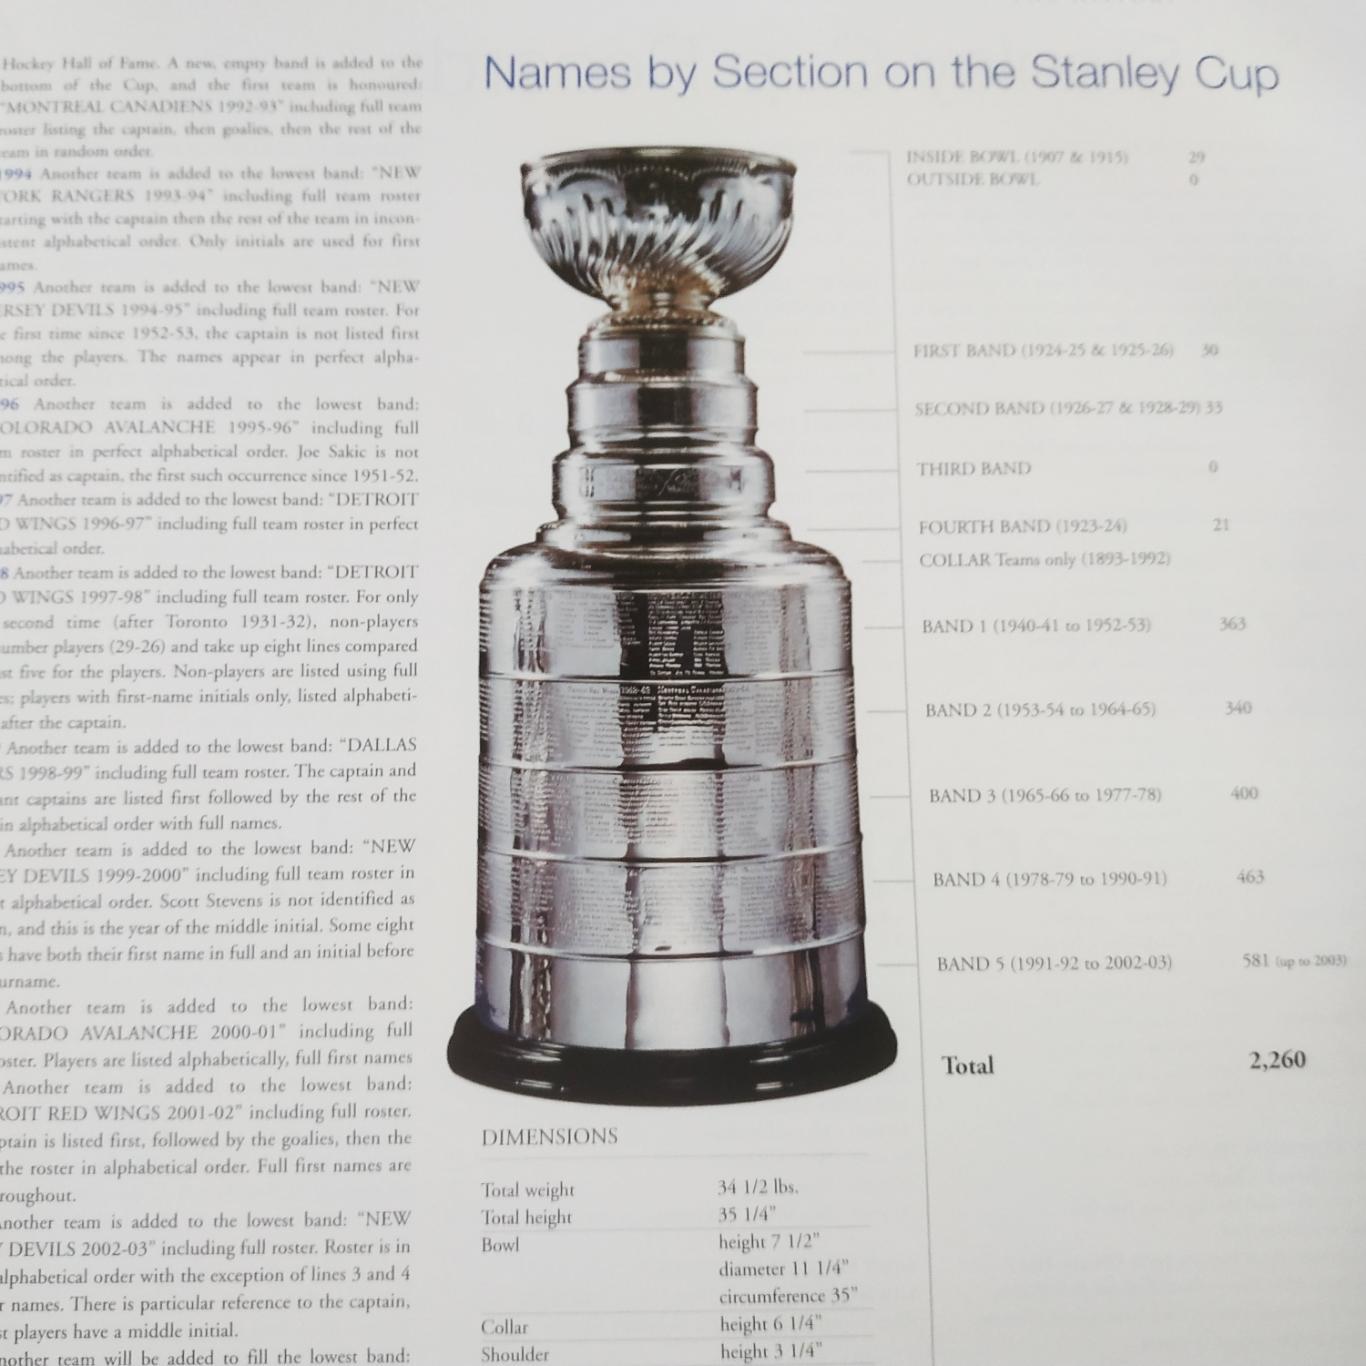 ХОККЕЙ КНИГА ЛОРД СТЭНЛИ ЗАЛ СЛАВЫ NHL 2004 LORD STANLEY CUP HOCKEY HALL OF FAME 2